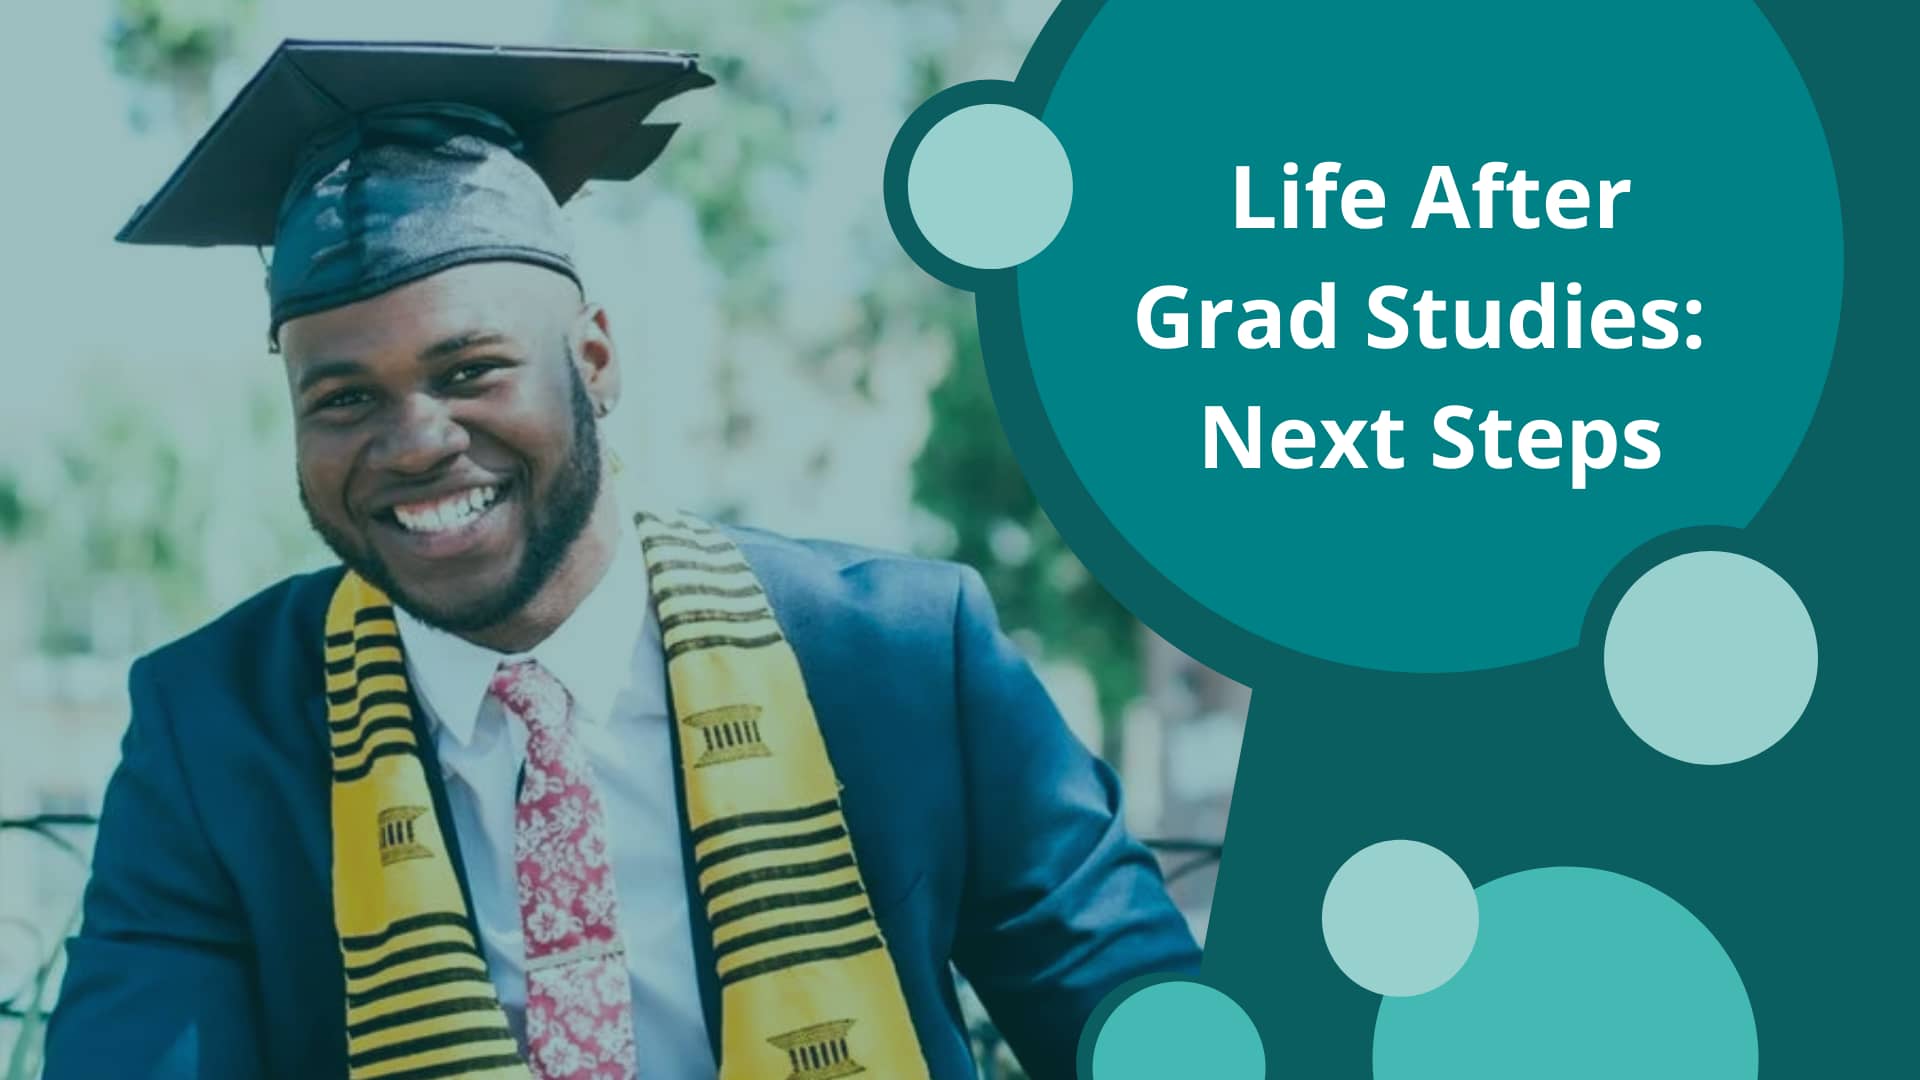 Life after grad studies: Next steps?